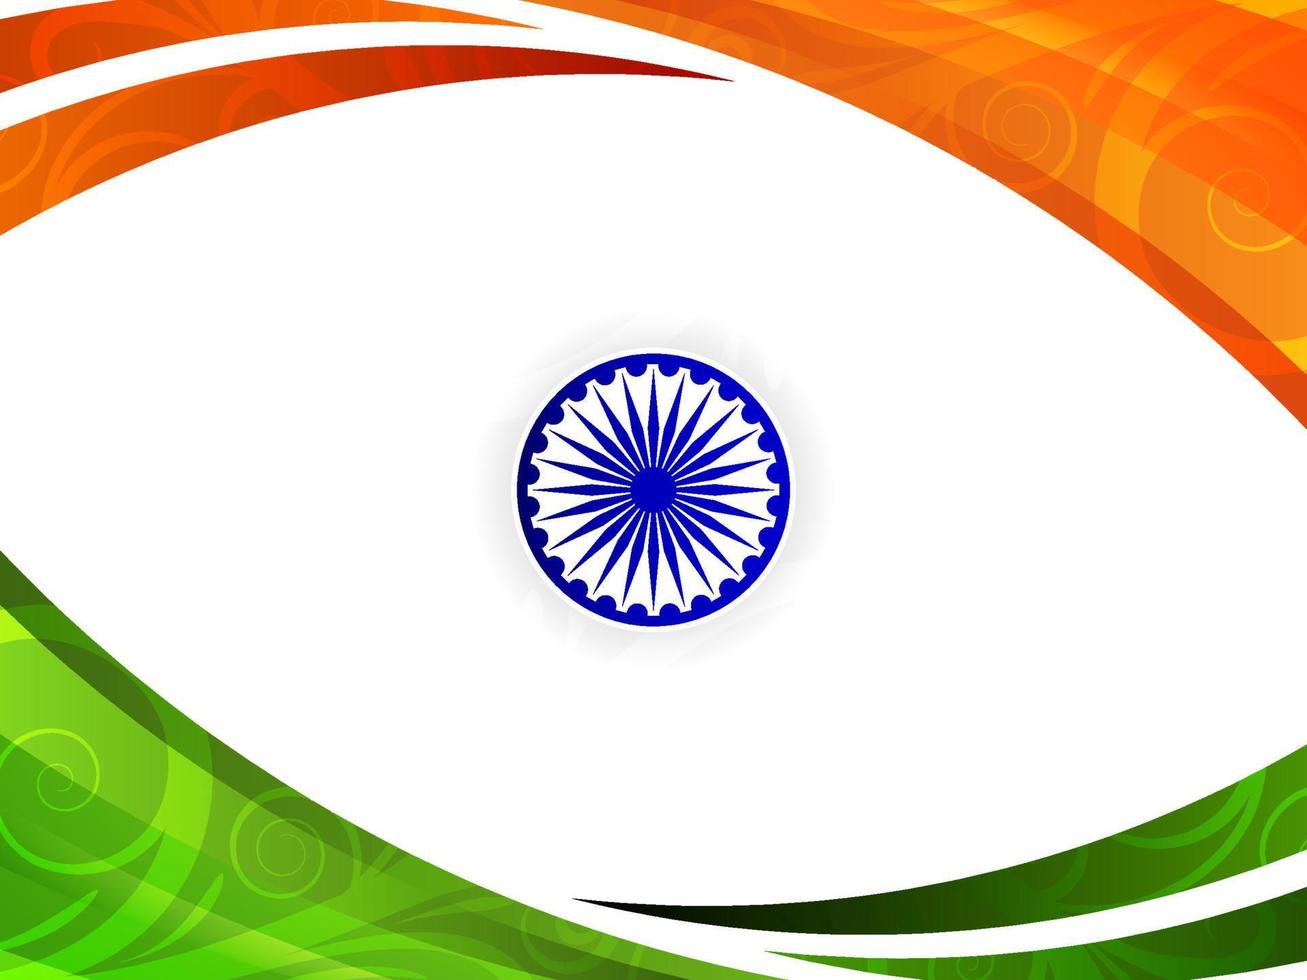 bandeira indiana tema dia da república onda estilo fundo elegante vetor